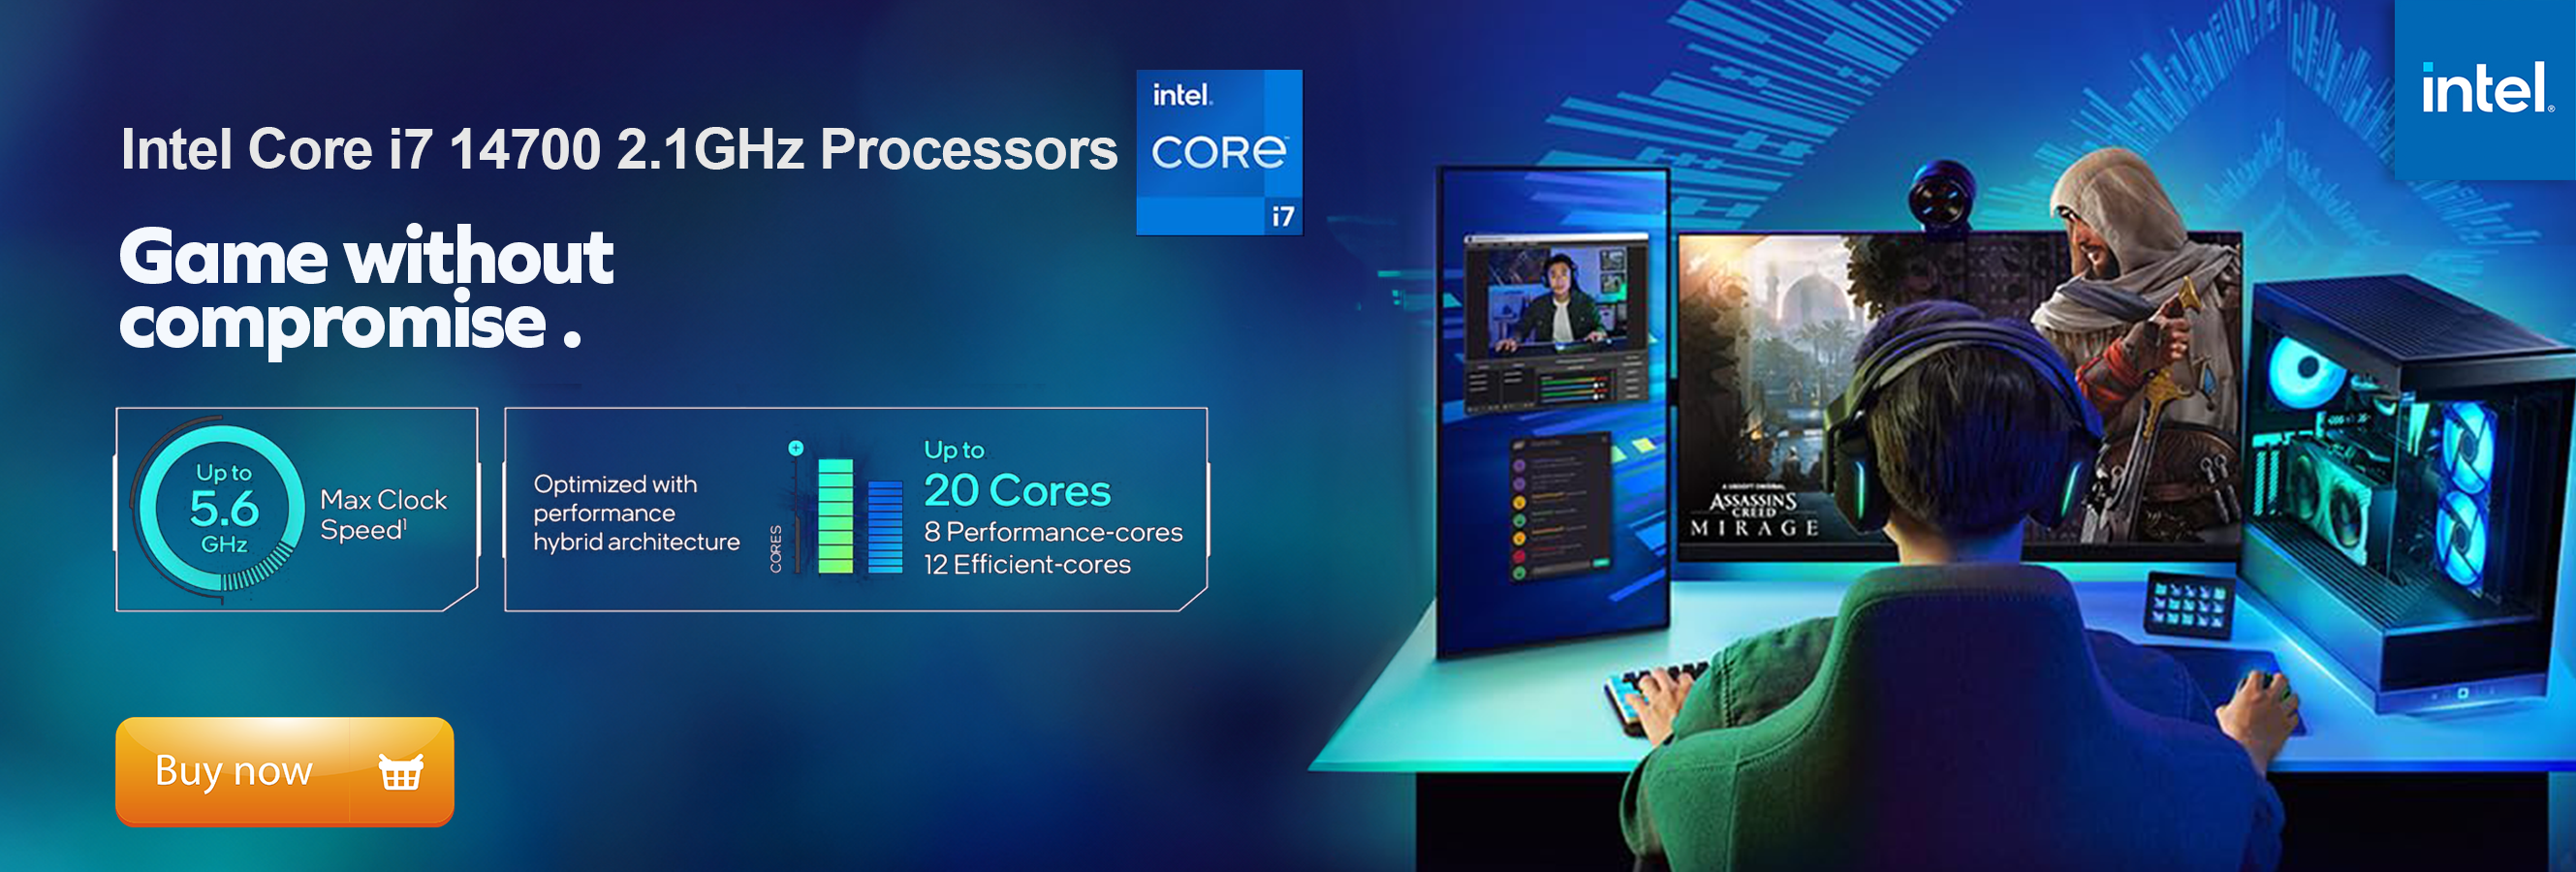 Intel Core i9 14900KS 3.2Ghz Processor